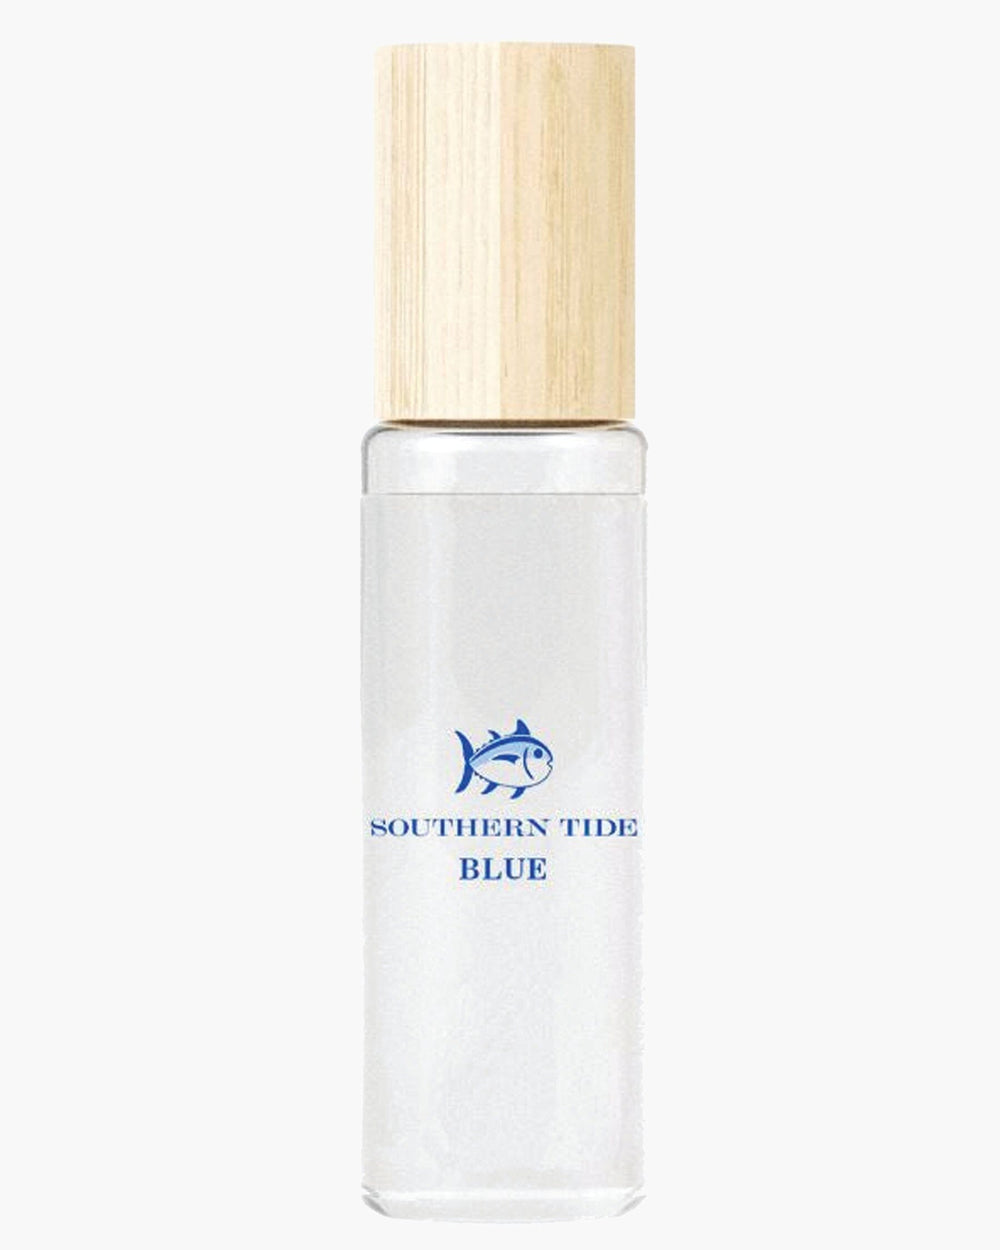 Southern Tide Blue Fragrance (Travel Size)